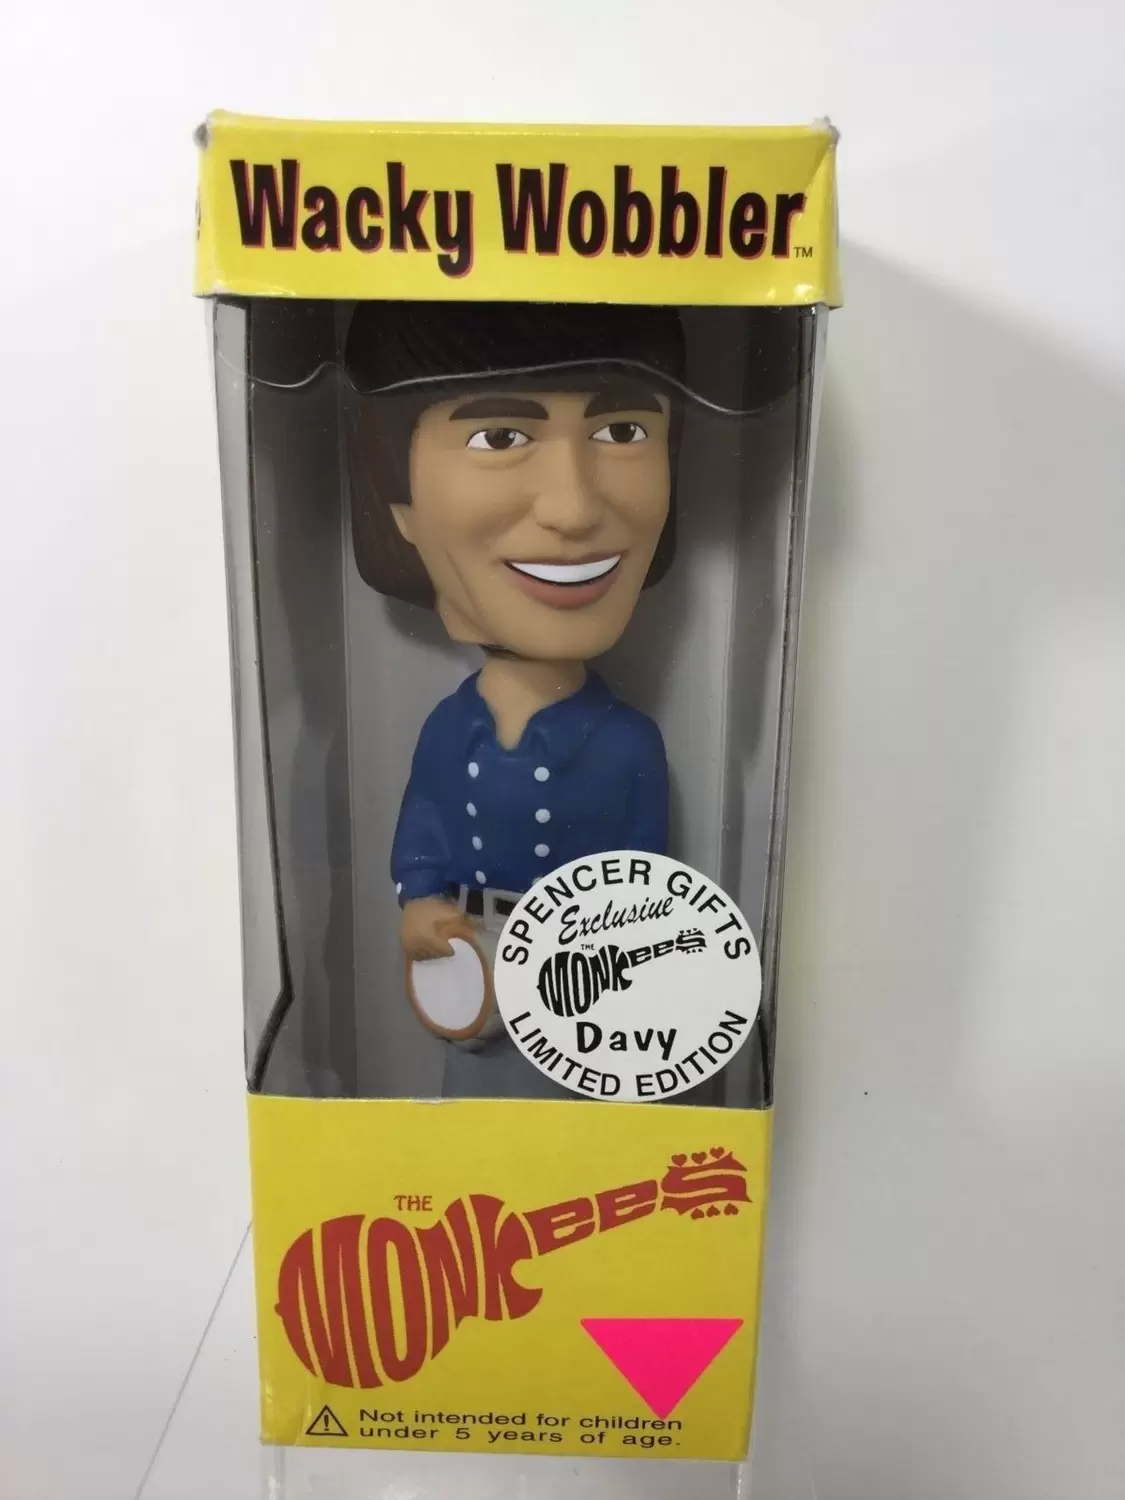 Wacky Wobbler Music - The Monkees - Davy